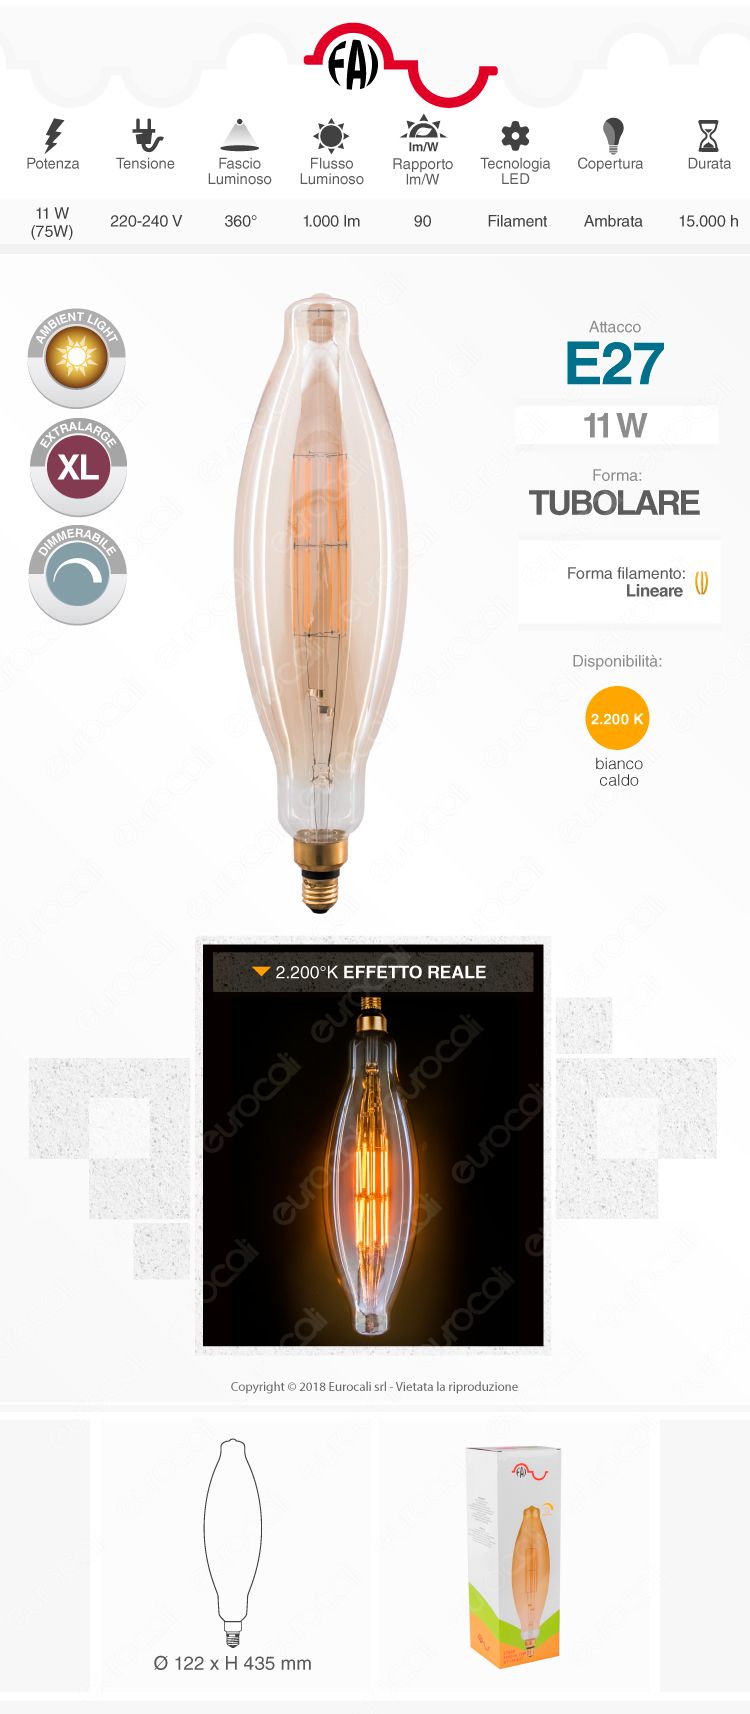 FAI Lampada LED Vintage XL E27 11W Tubolare Filamento Ambrata Dimmerabile - mod. 5251/CA/ORO